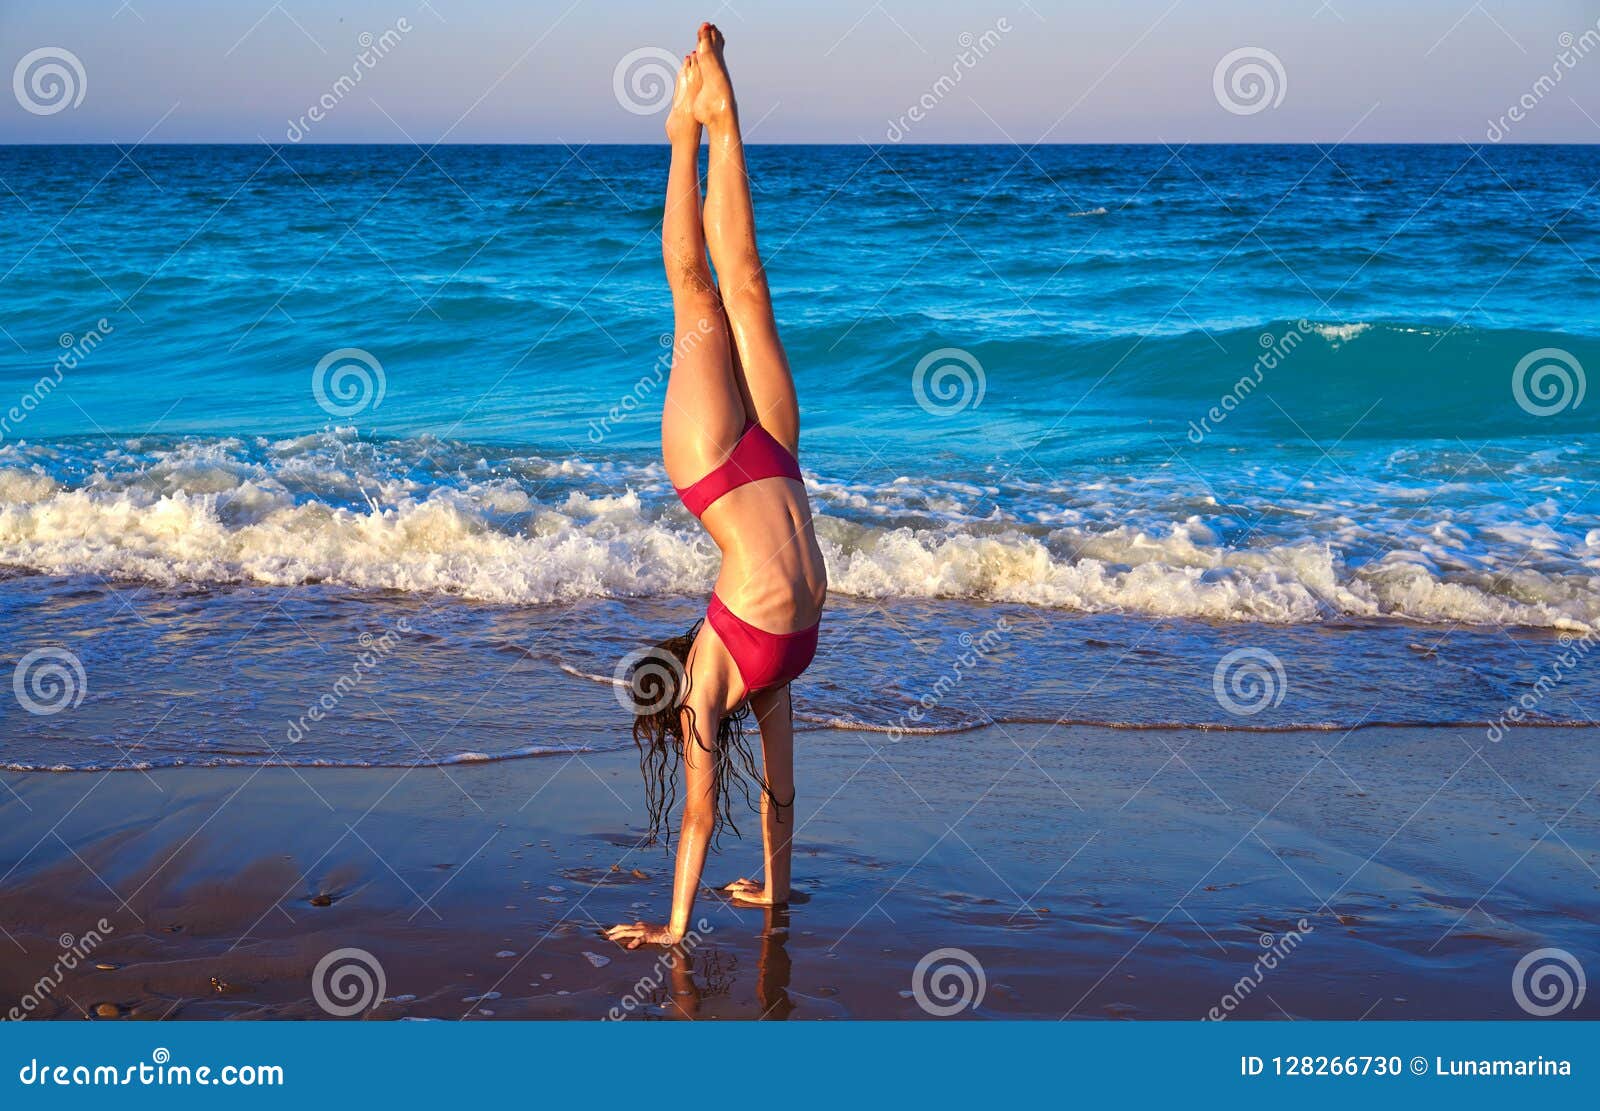 acrobatic gymnastics bikini girl in a beach